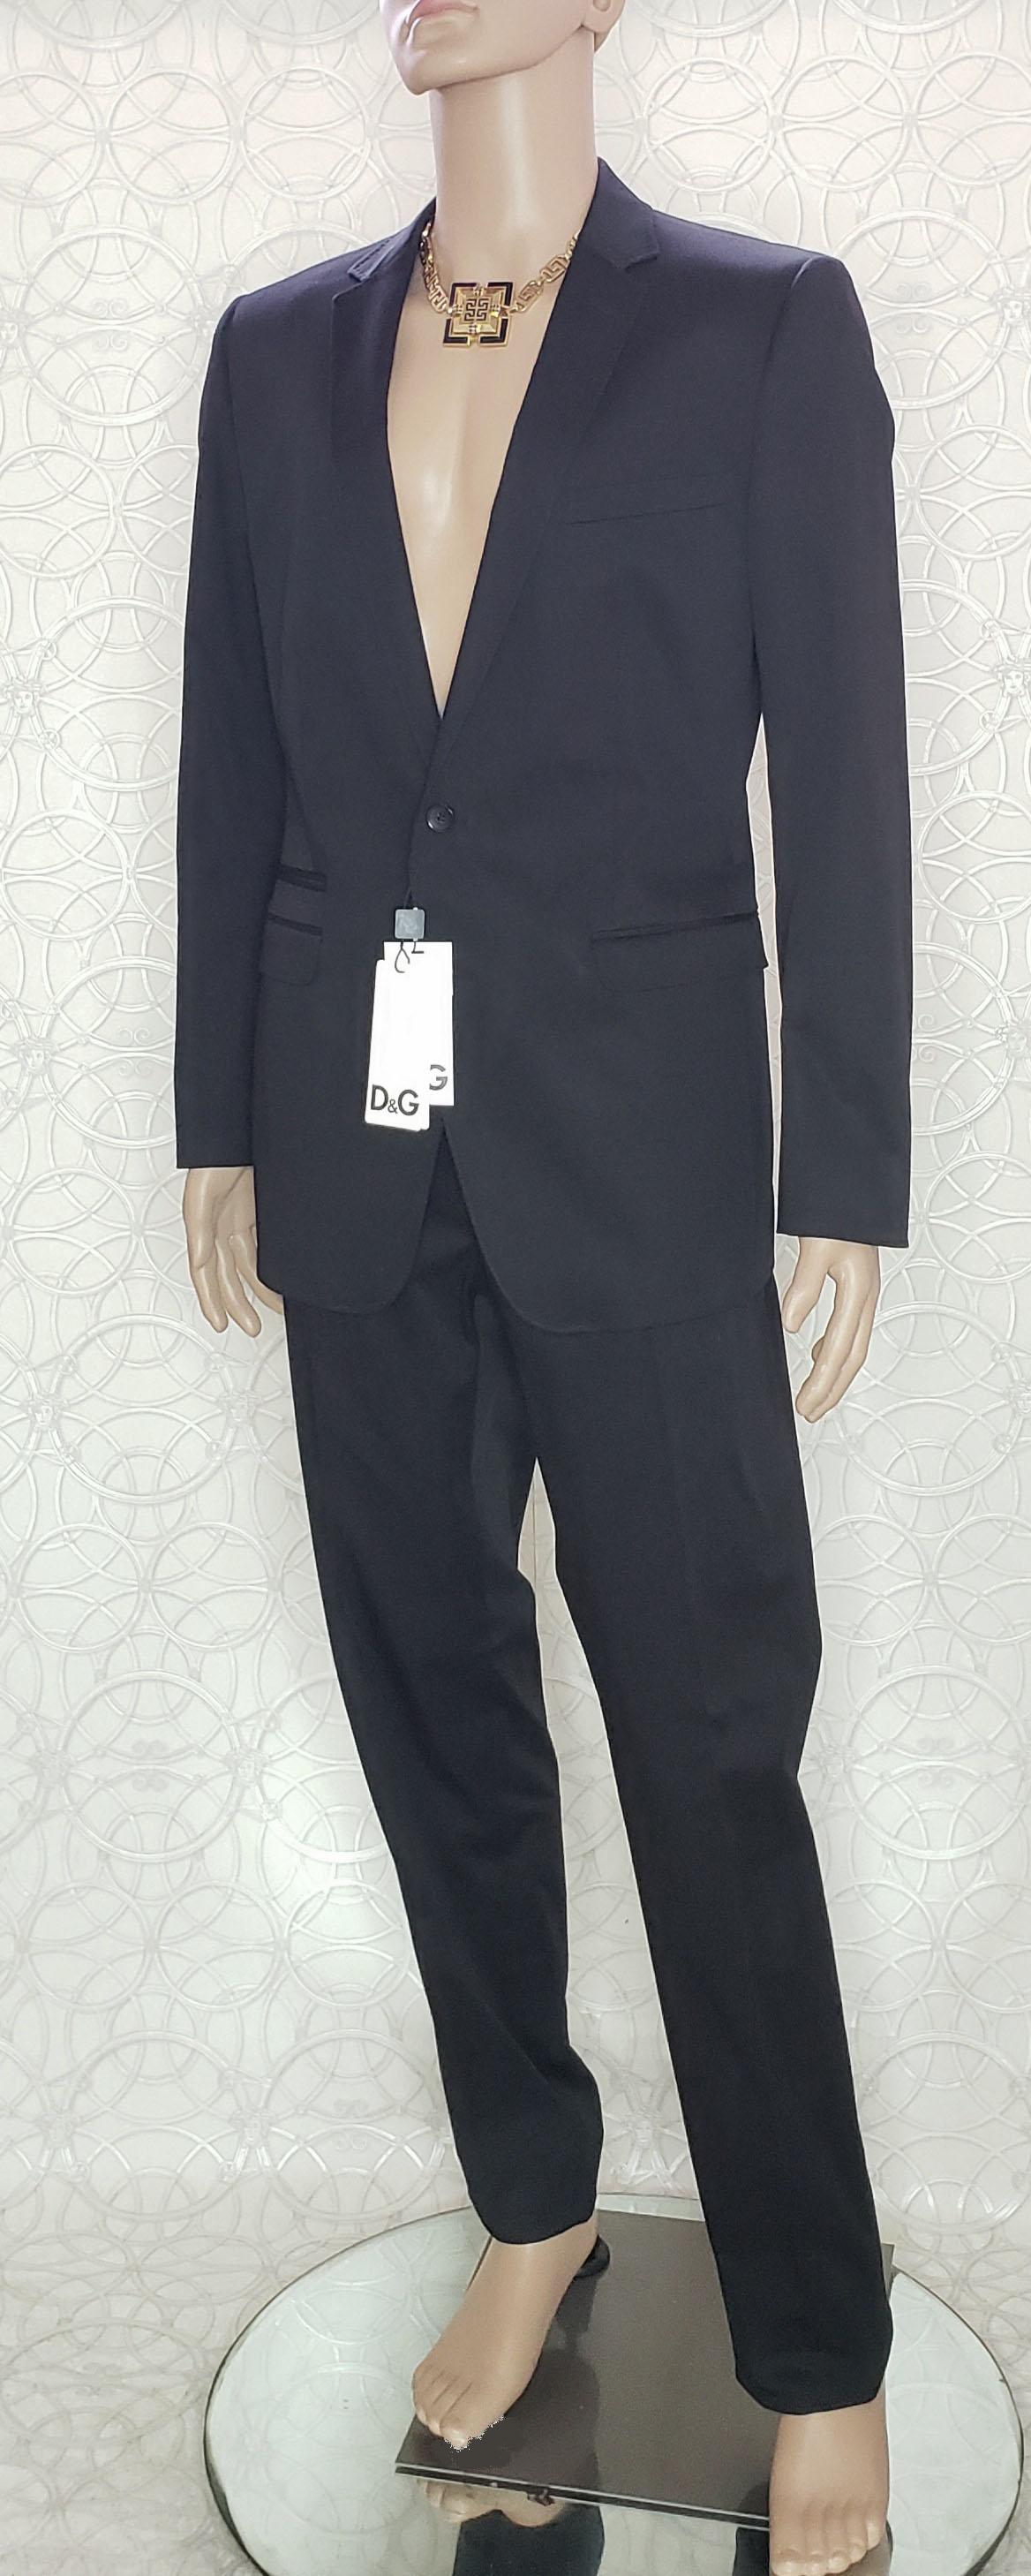 D&G 
Dolce and Gabbana

Black pant suit  
3 artificial pockets on the front 
2 buttons closure
IT Size 50 -  US 40 (L)



Measurements:
Jacket:
shoulder to shoulder 19